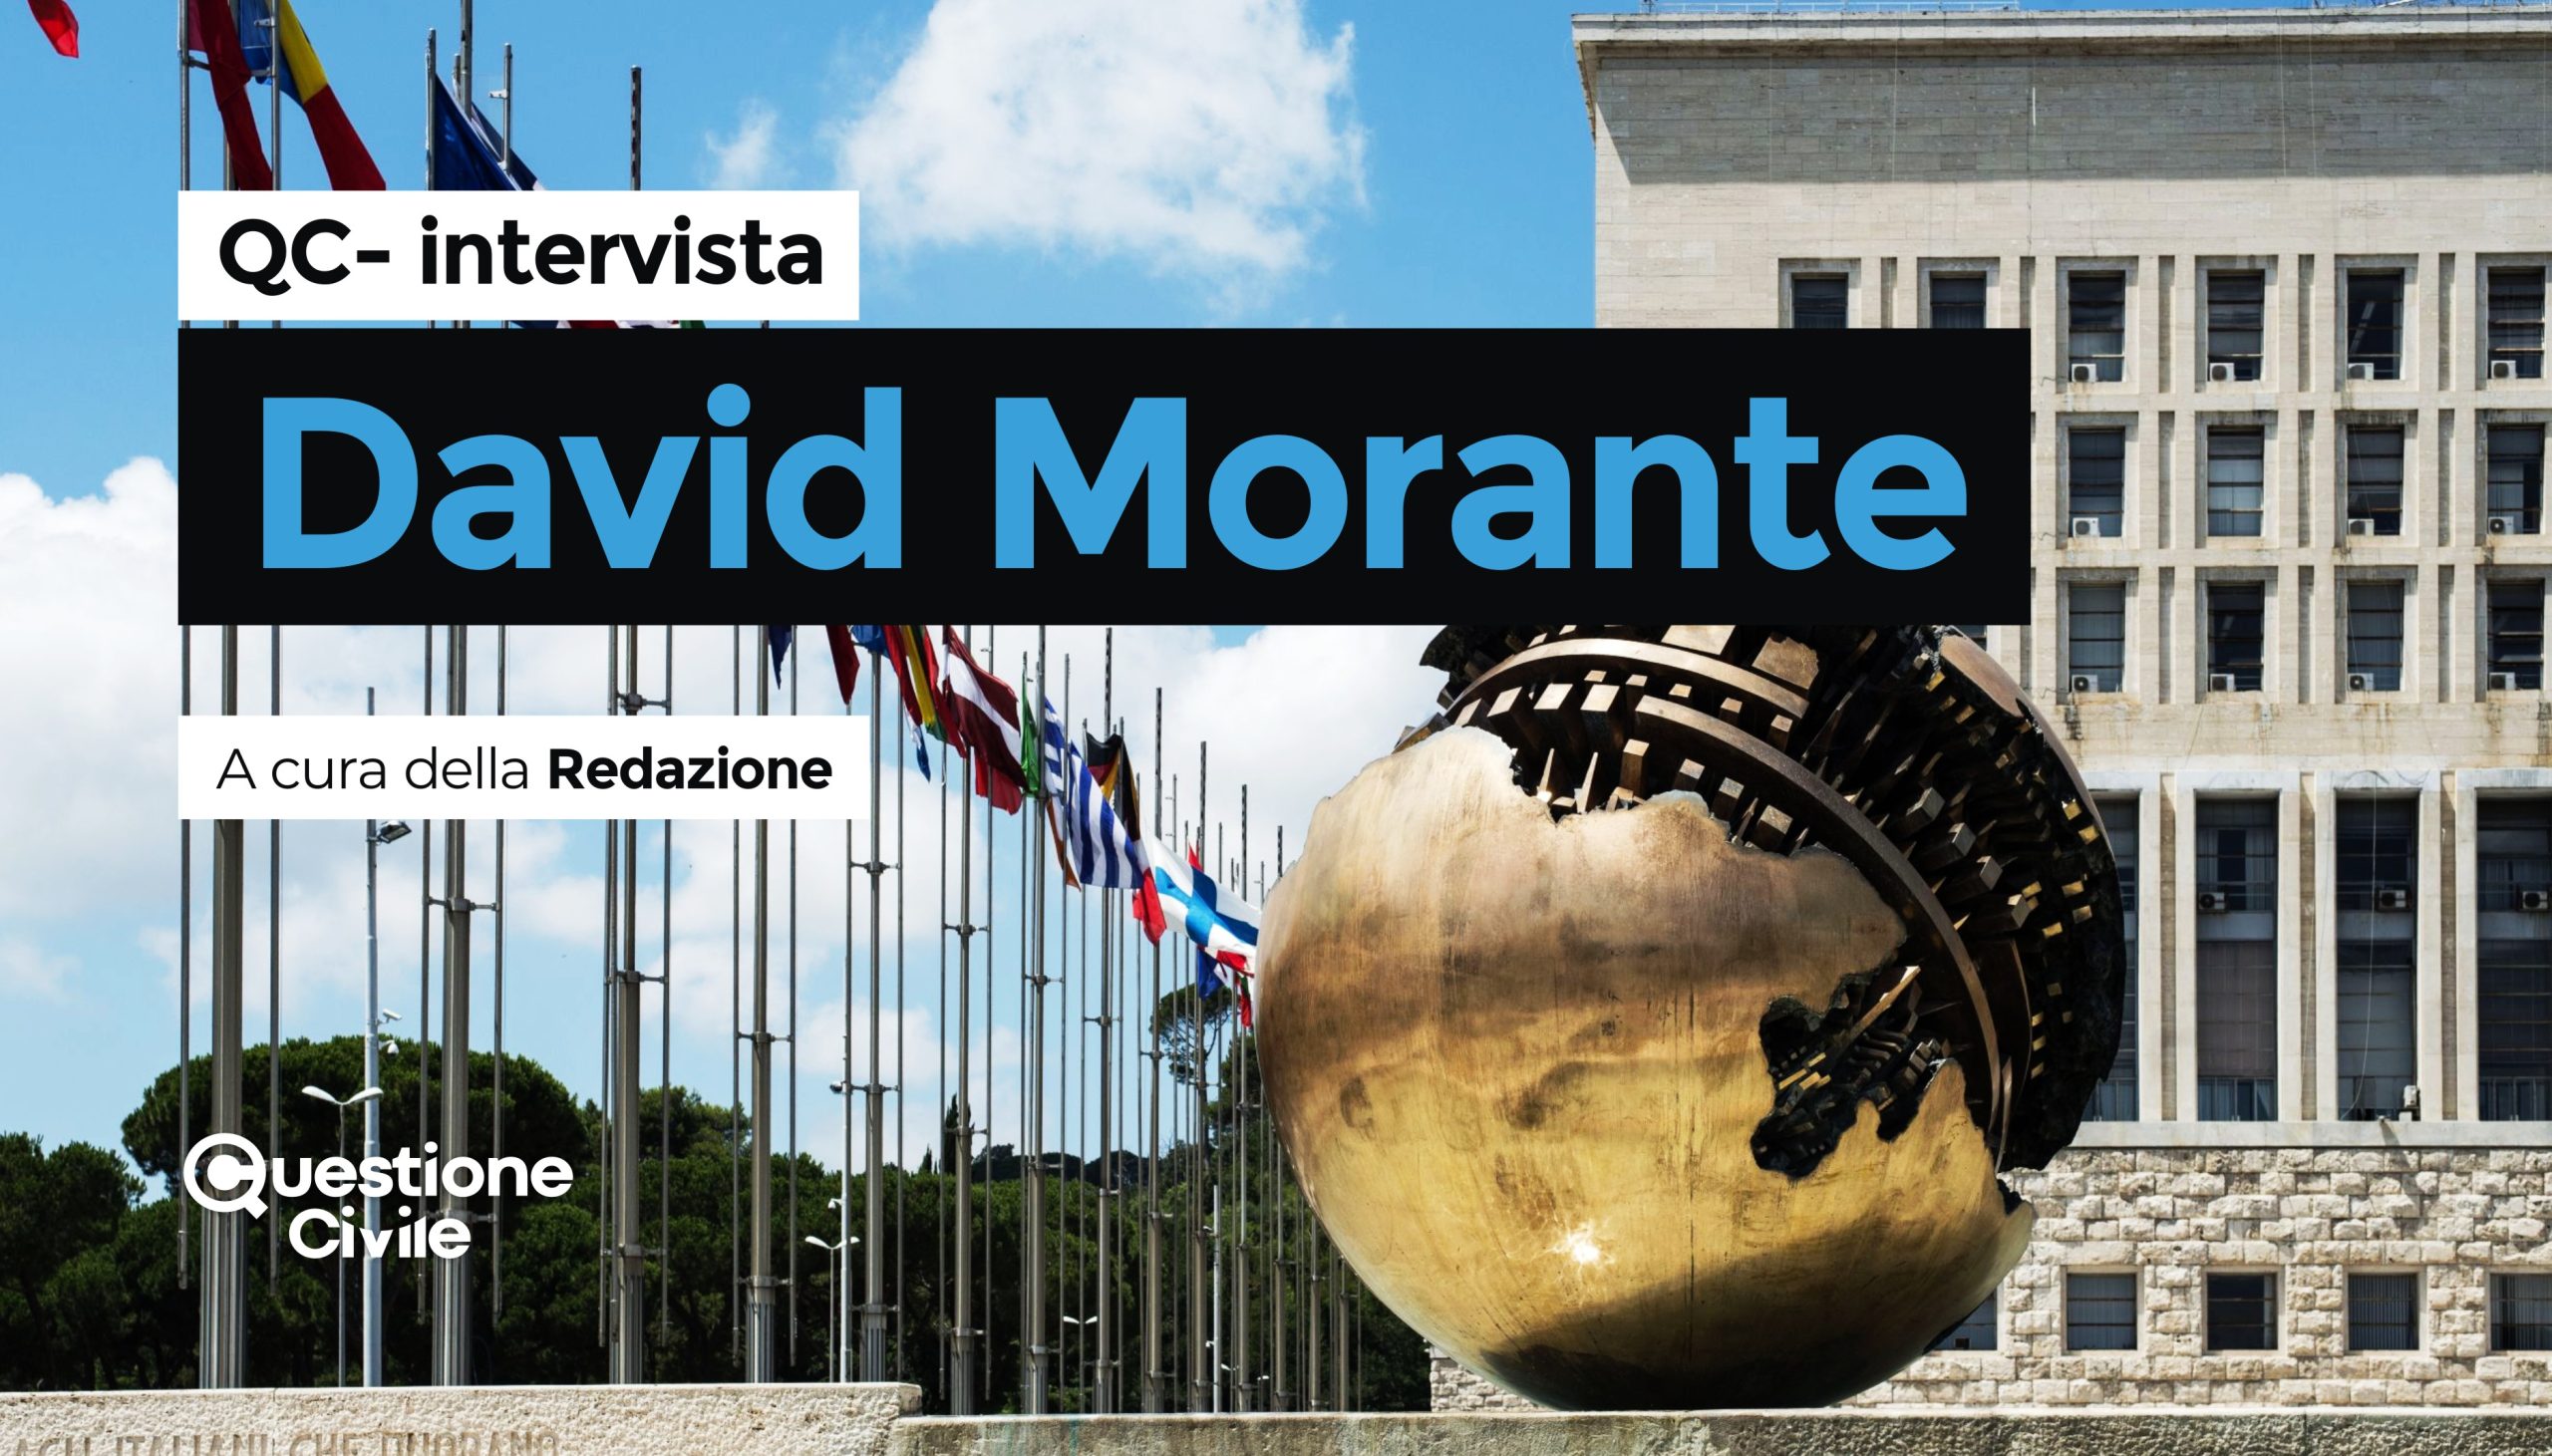 David Morante